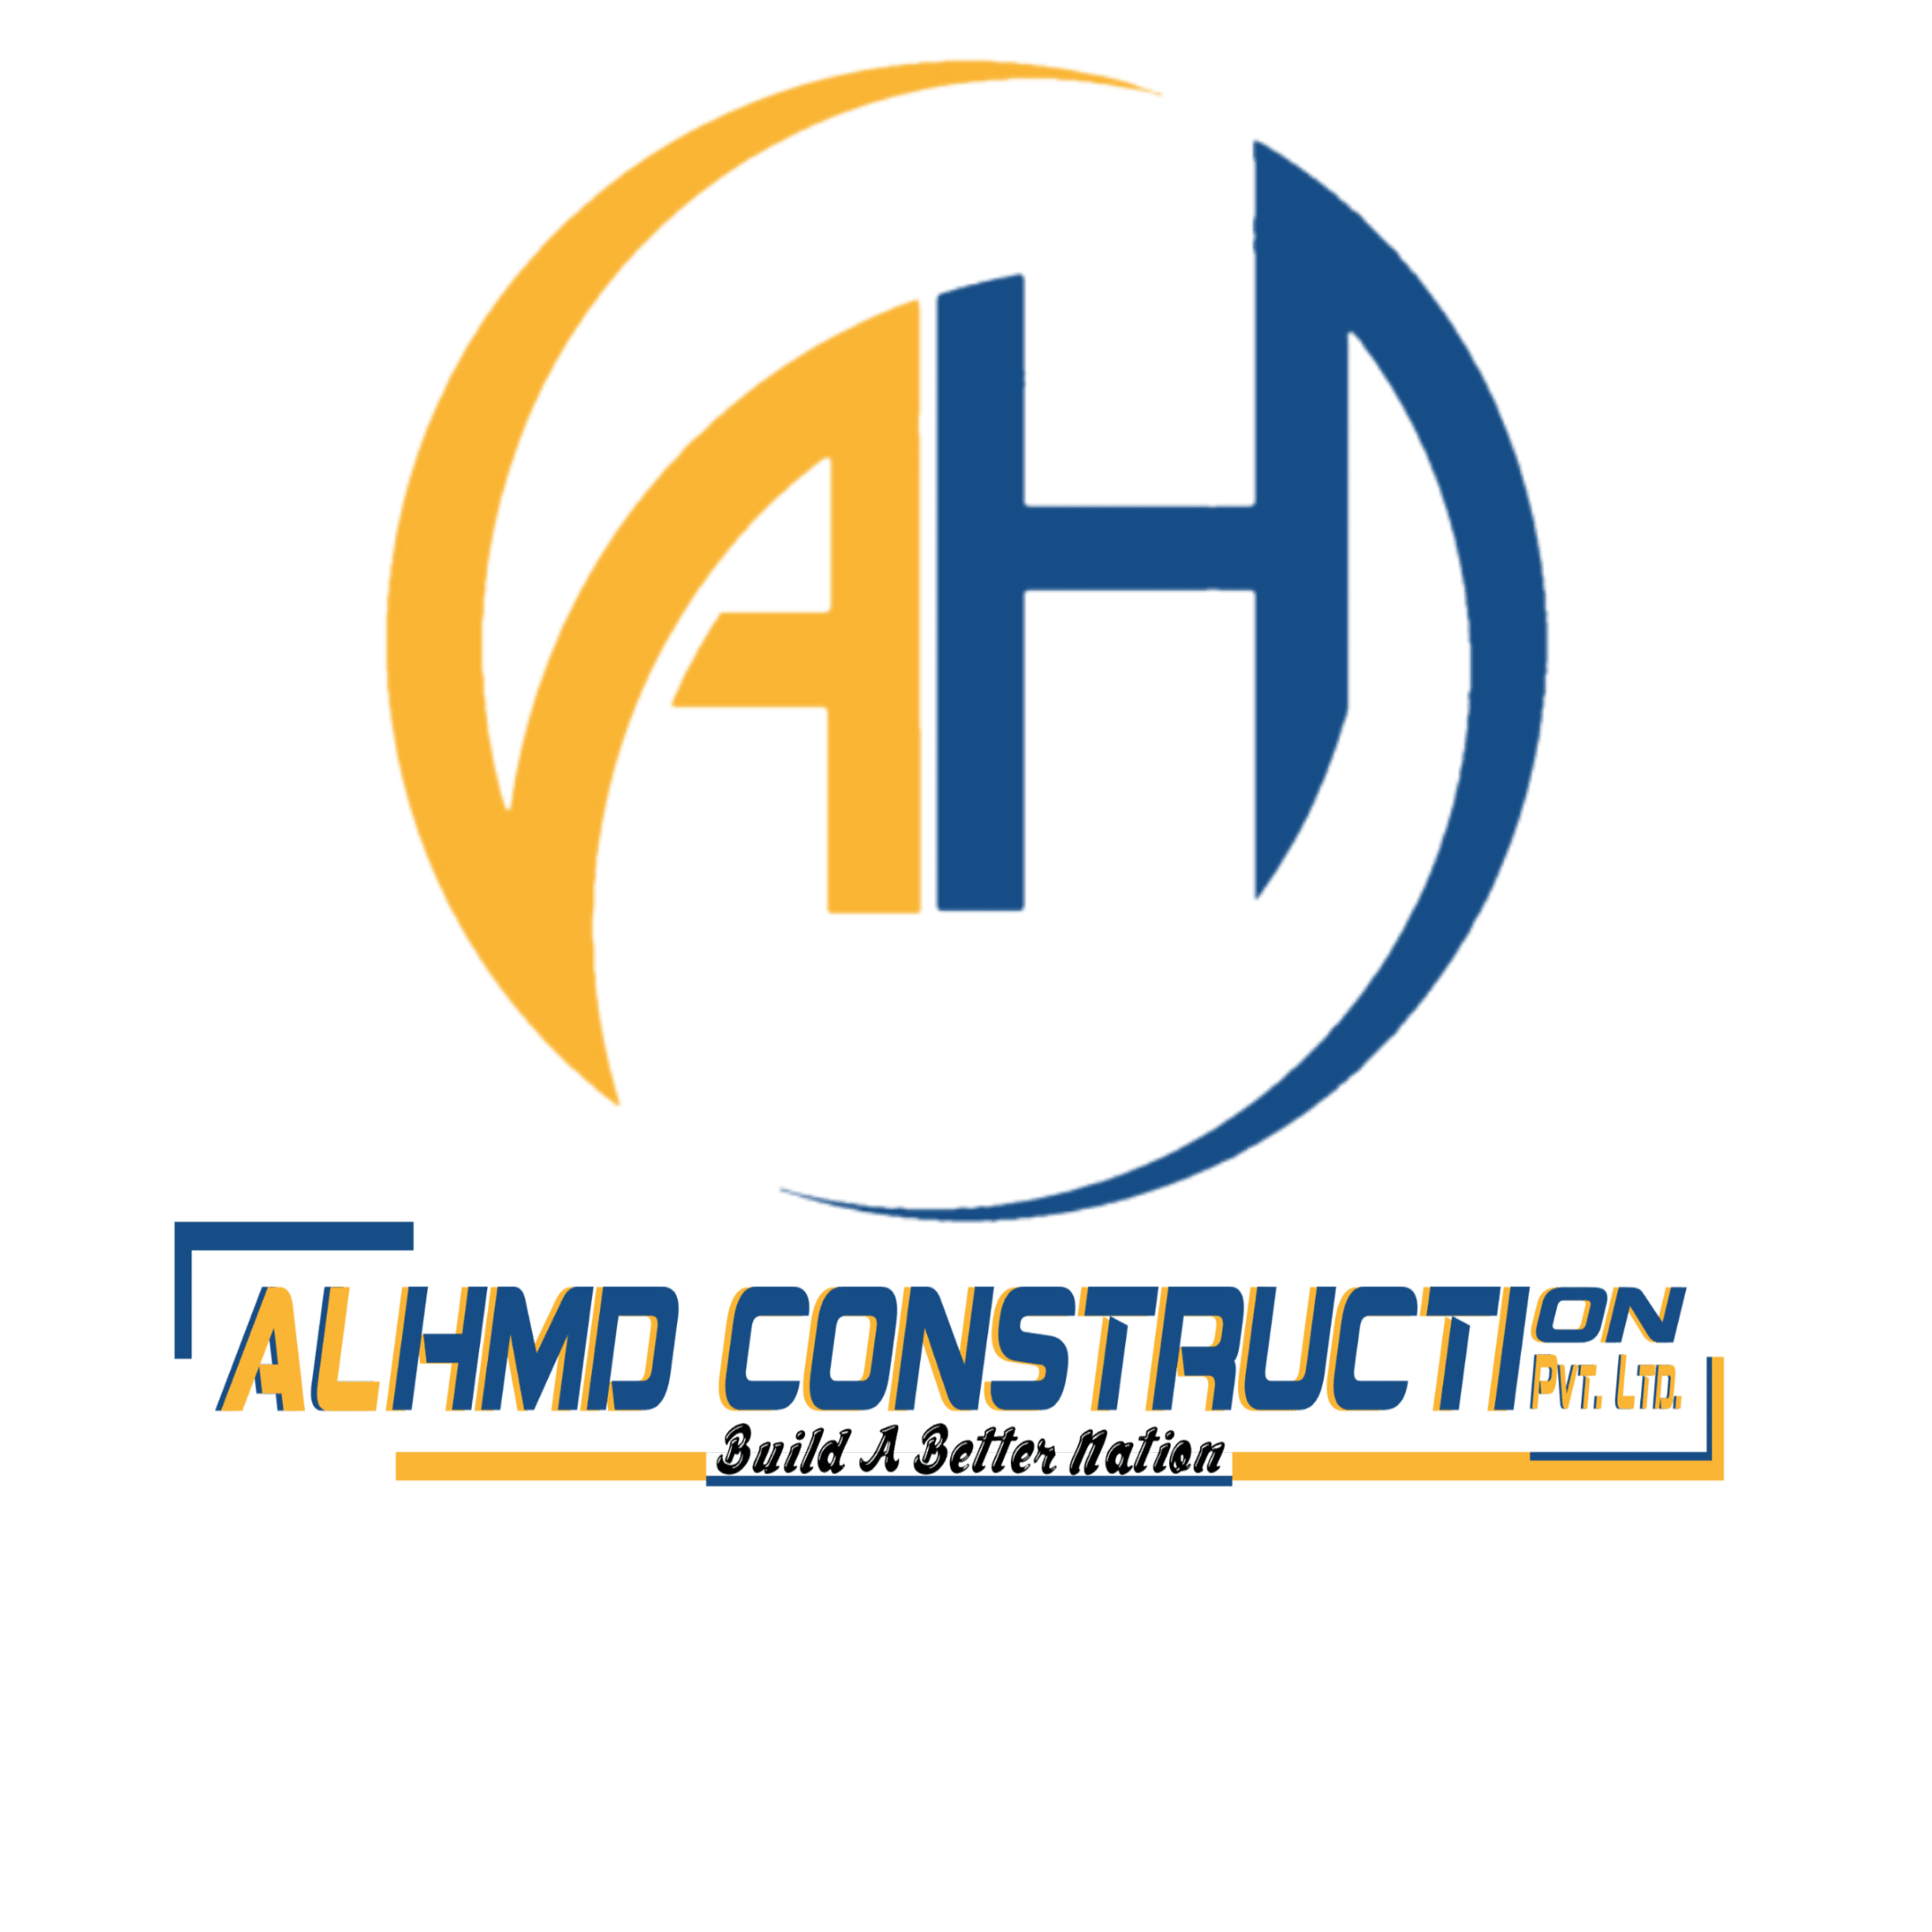 ALHMD Construction